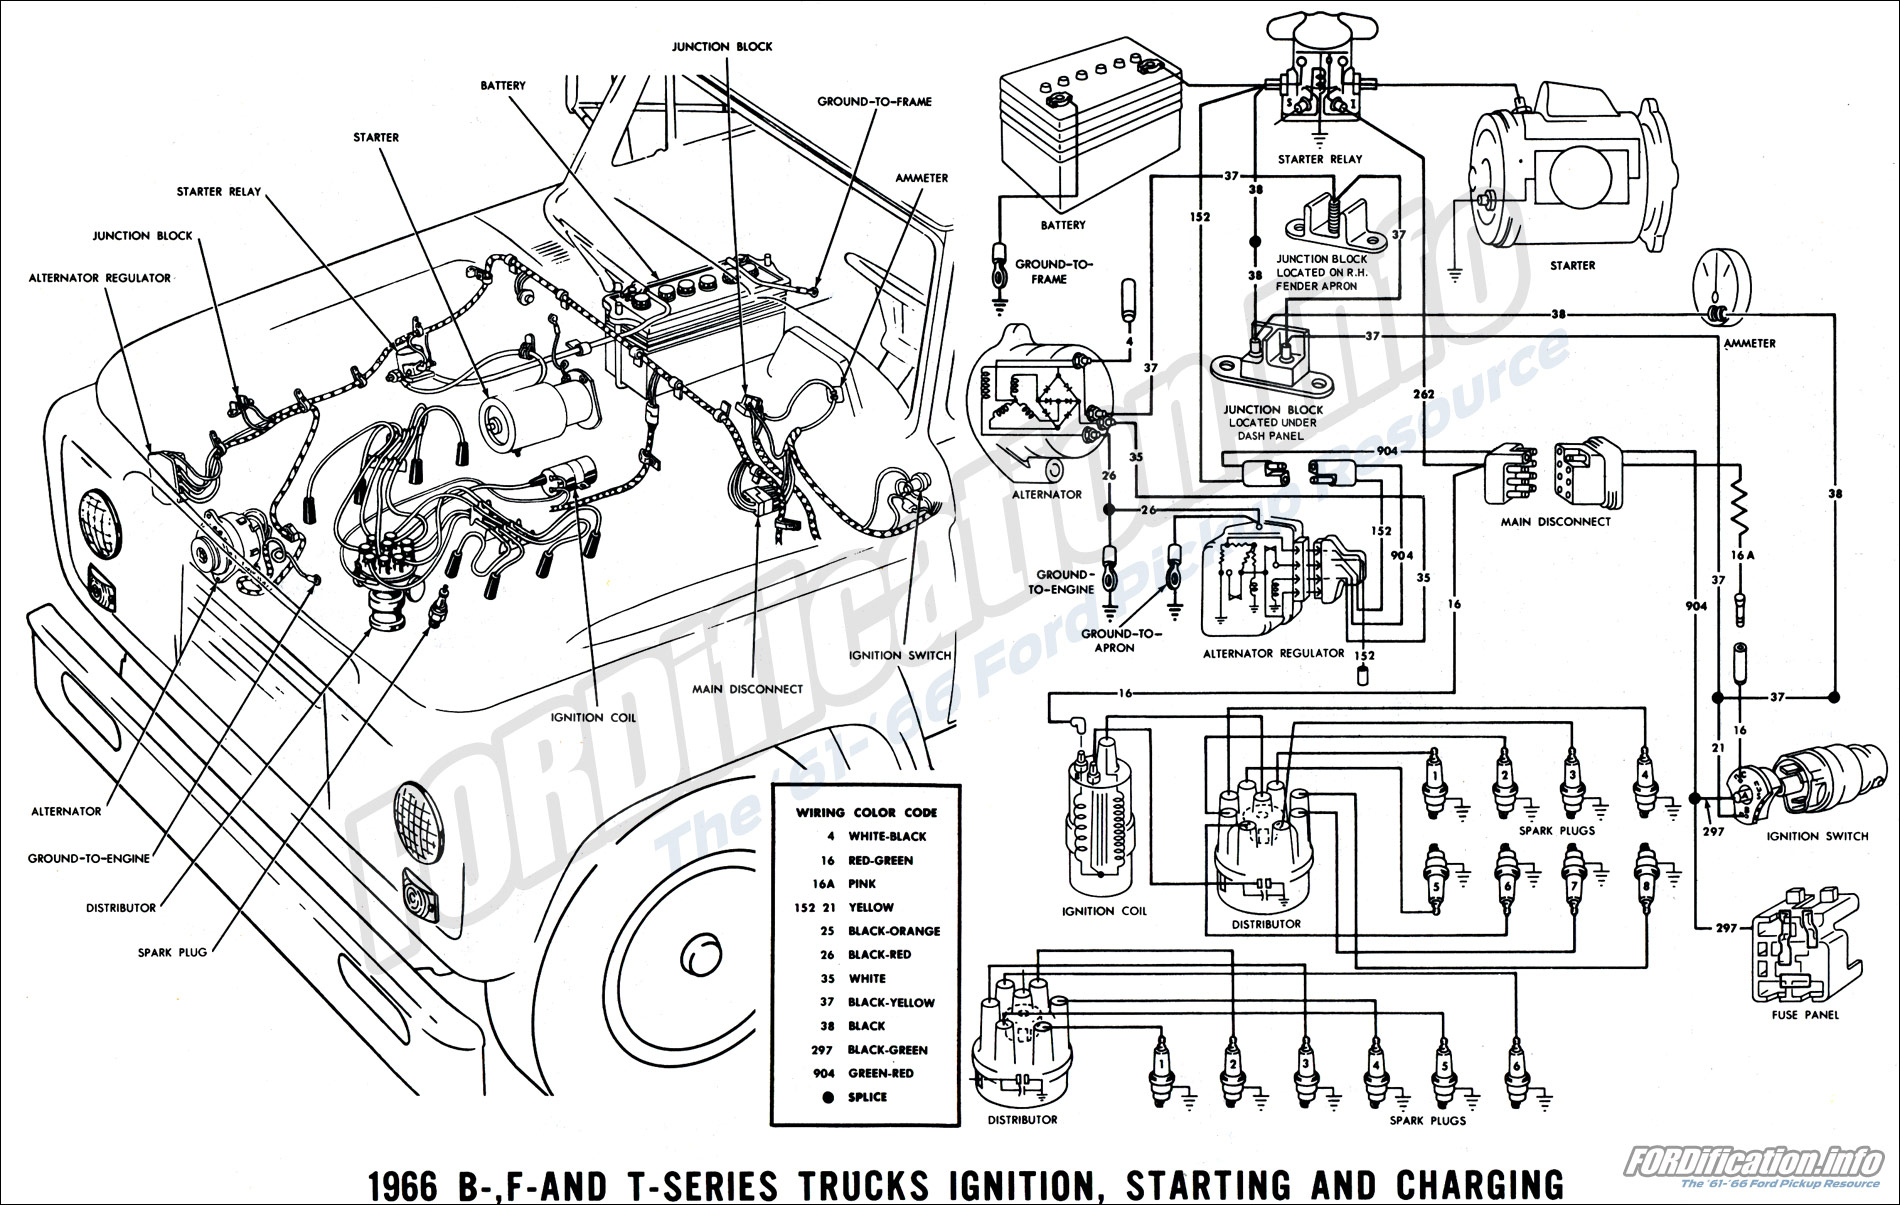 Mack Truck Wiring Diagrams Free | Wiring Diagram - Mack Truck Wiring Diagram Free Download